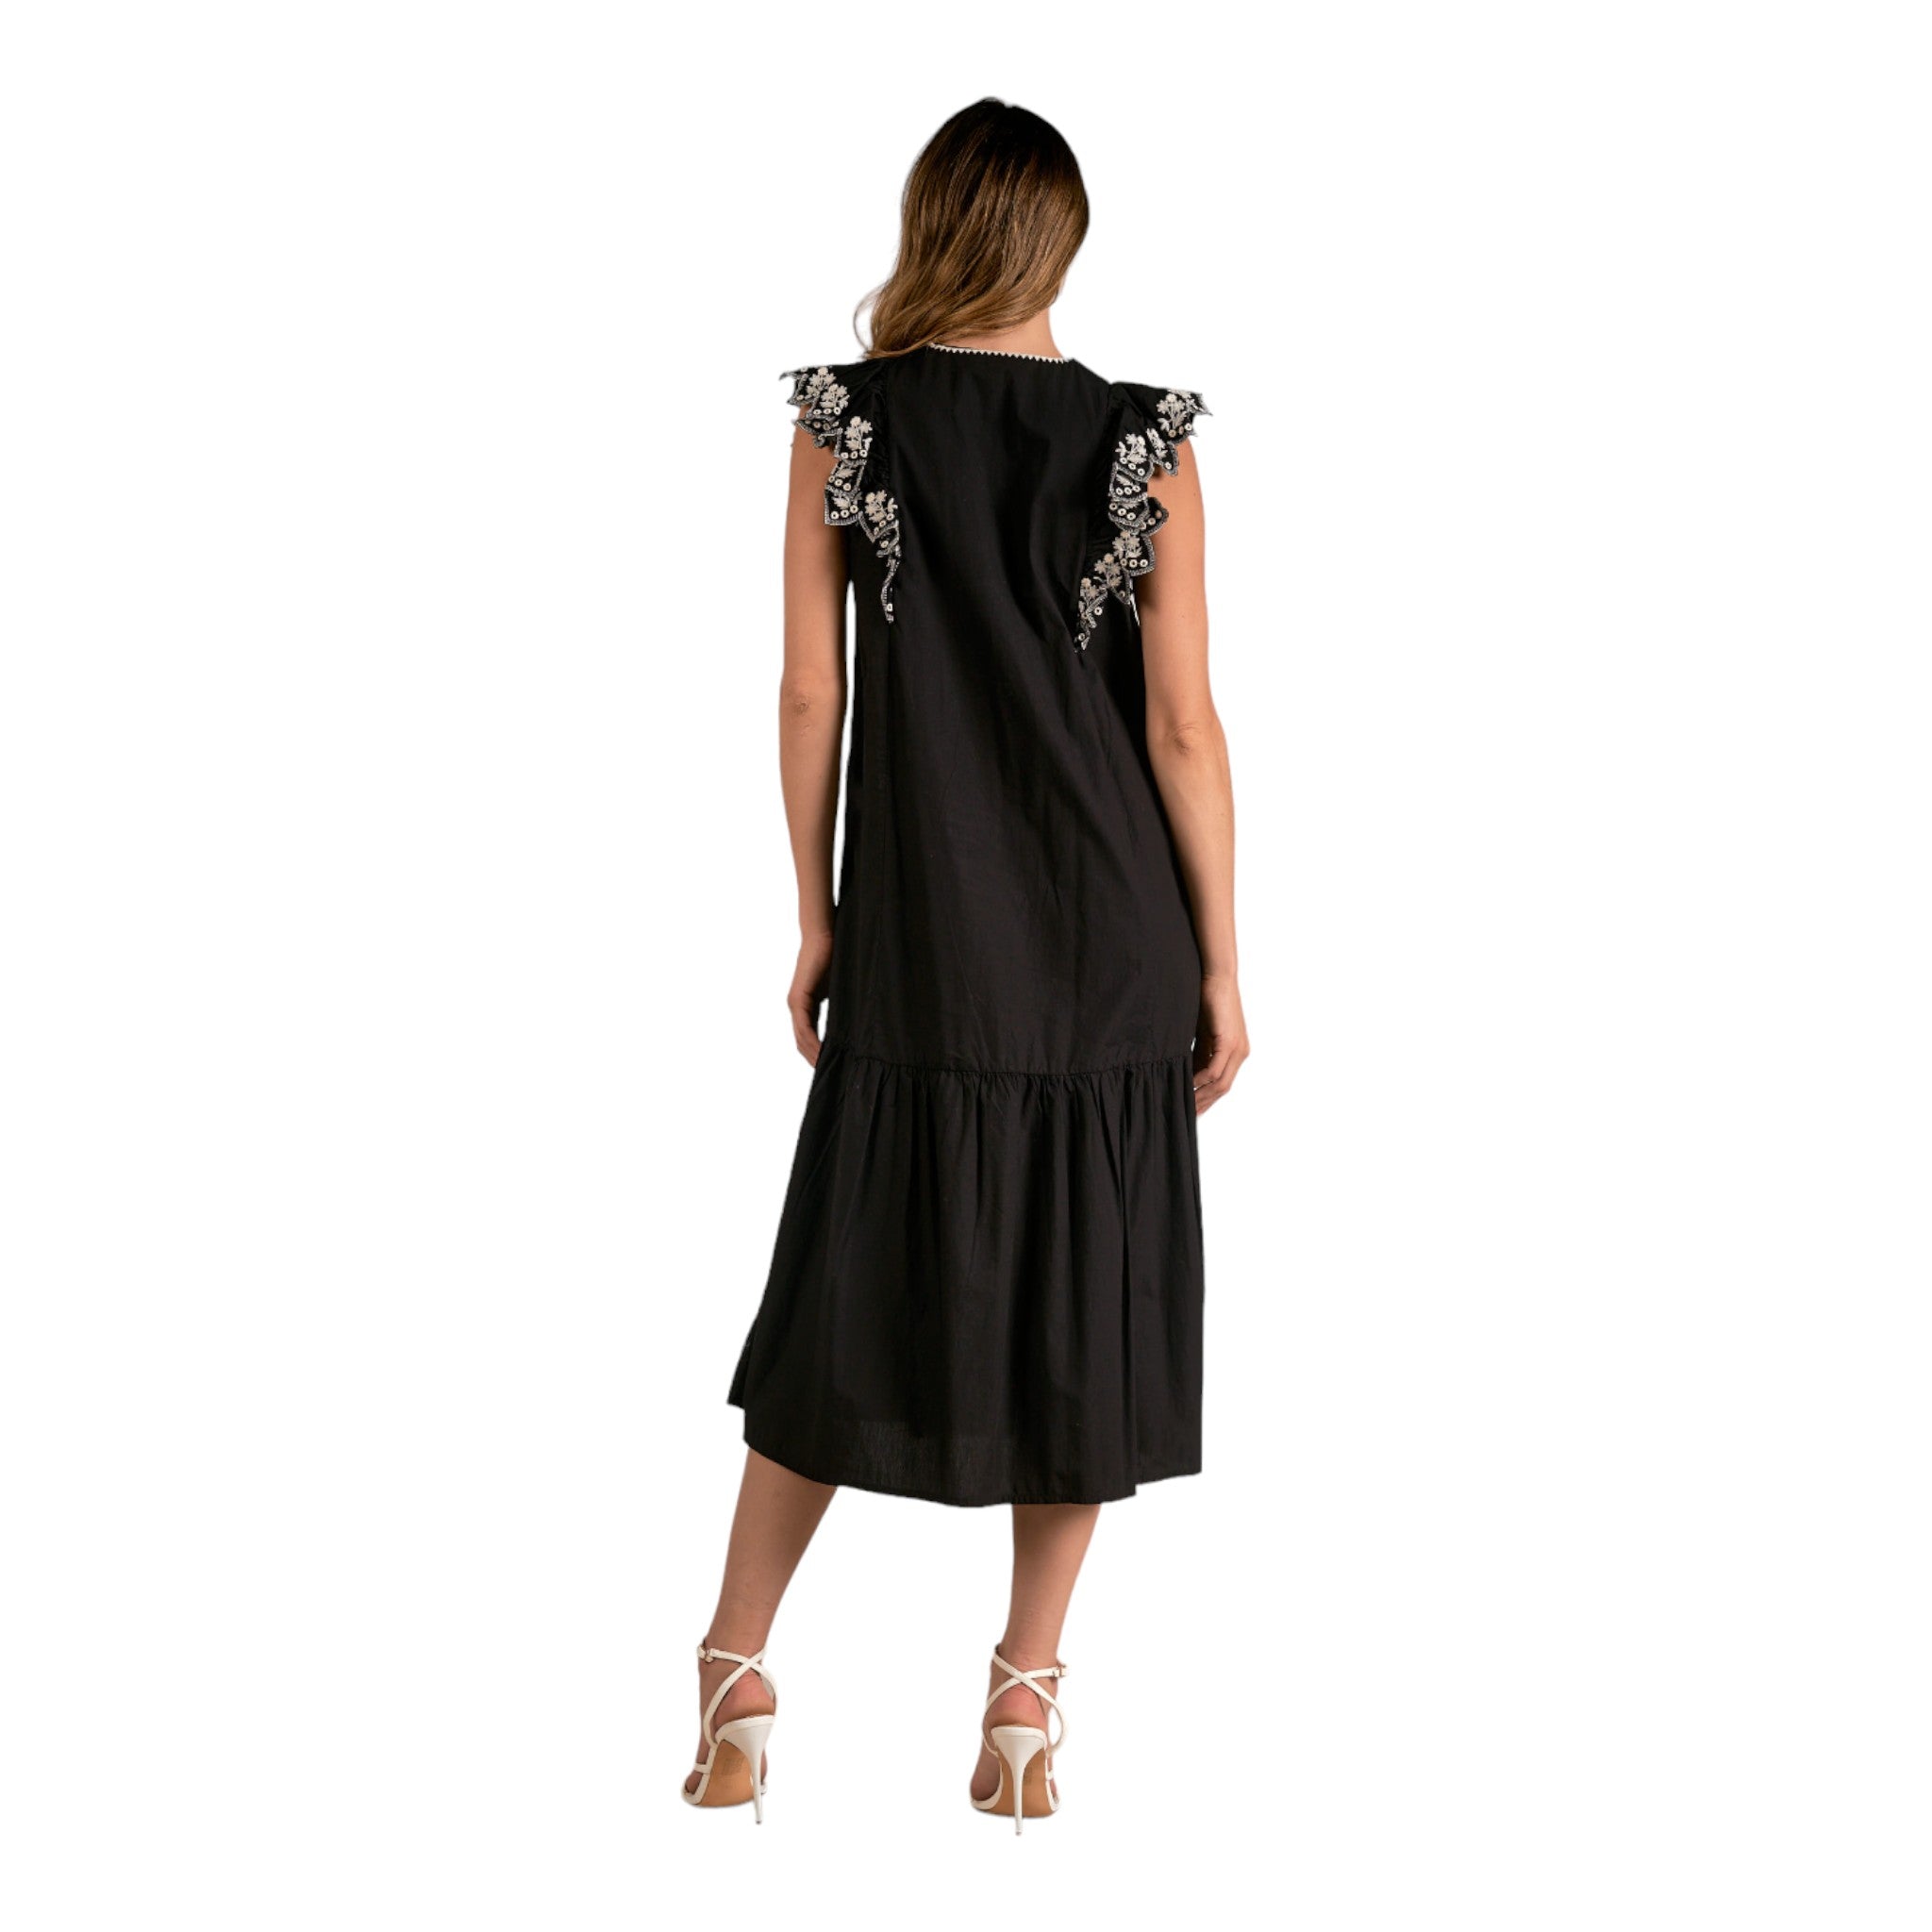 Elan - Embroidered Ruffle Maxi Dress - Black/Natural